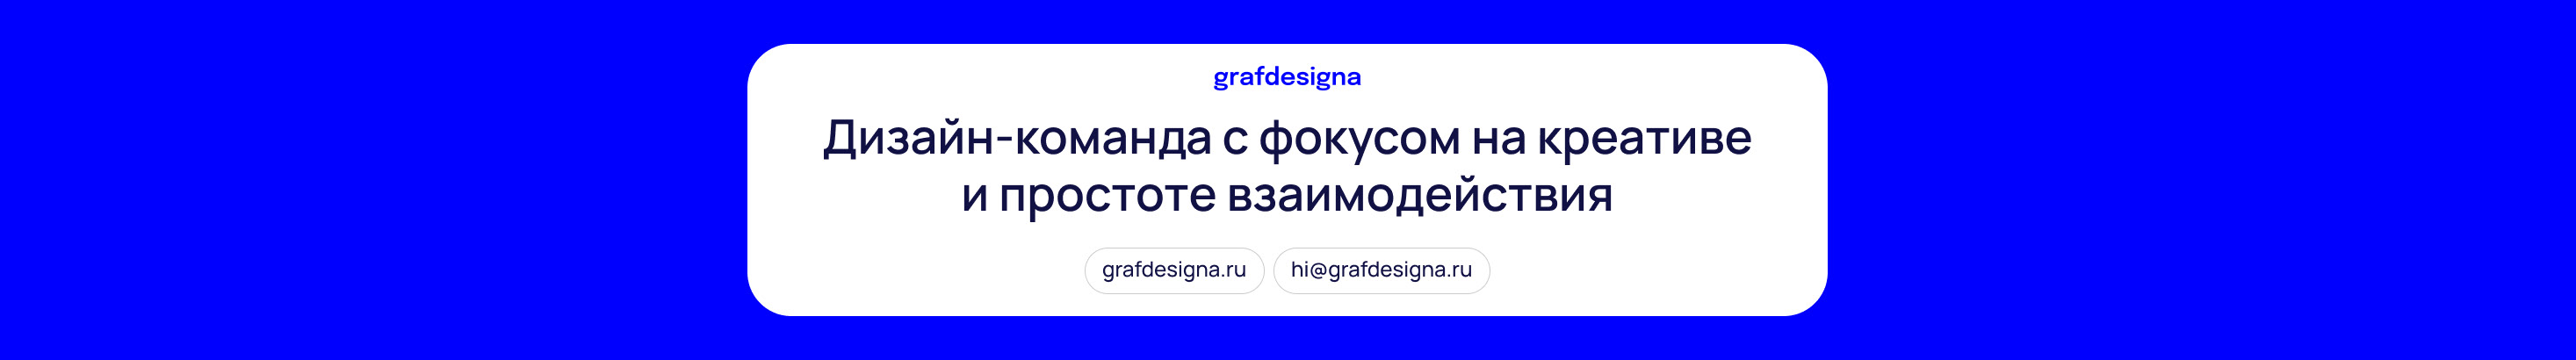 Коляс Иванов's profile banner